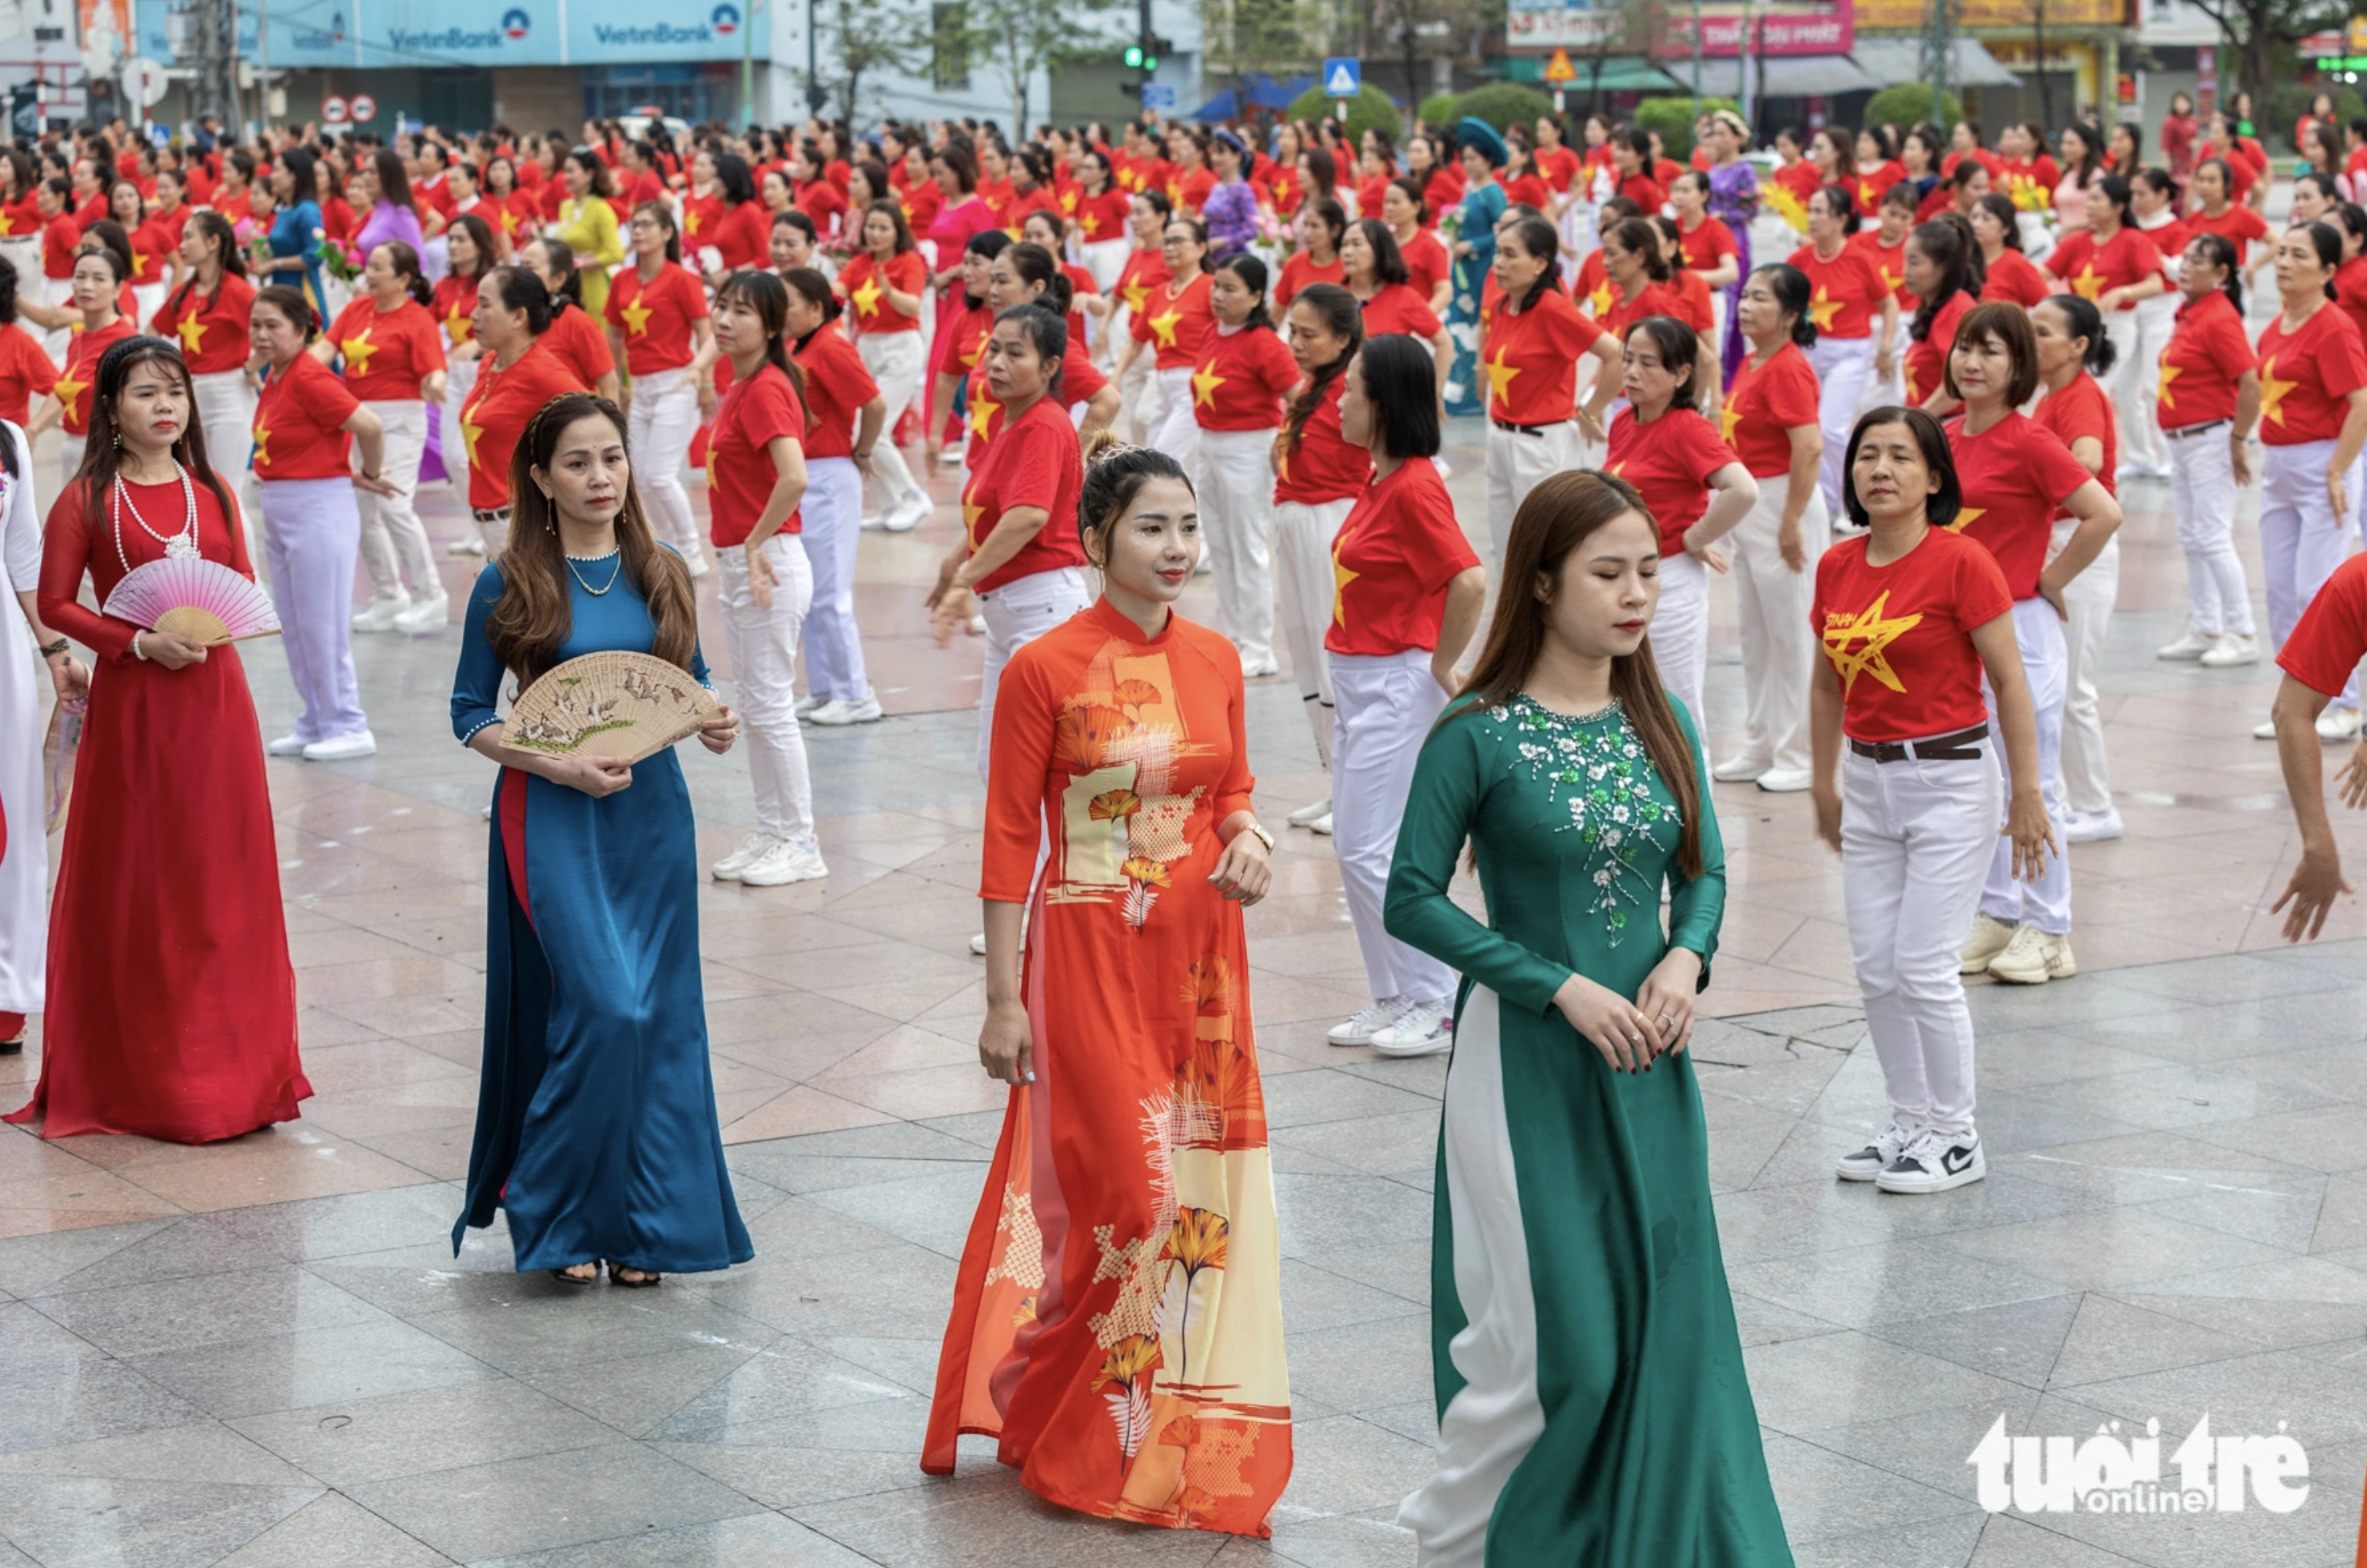 Over 1,000 Vietnamese women join dance ensemble to celebrate Int’l Women’s Day